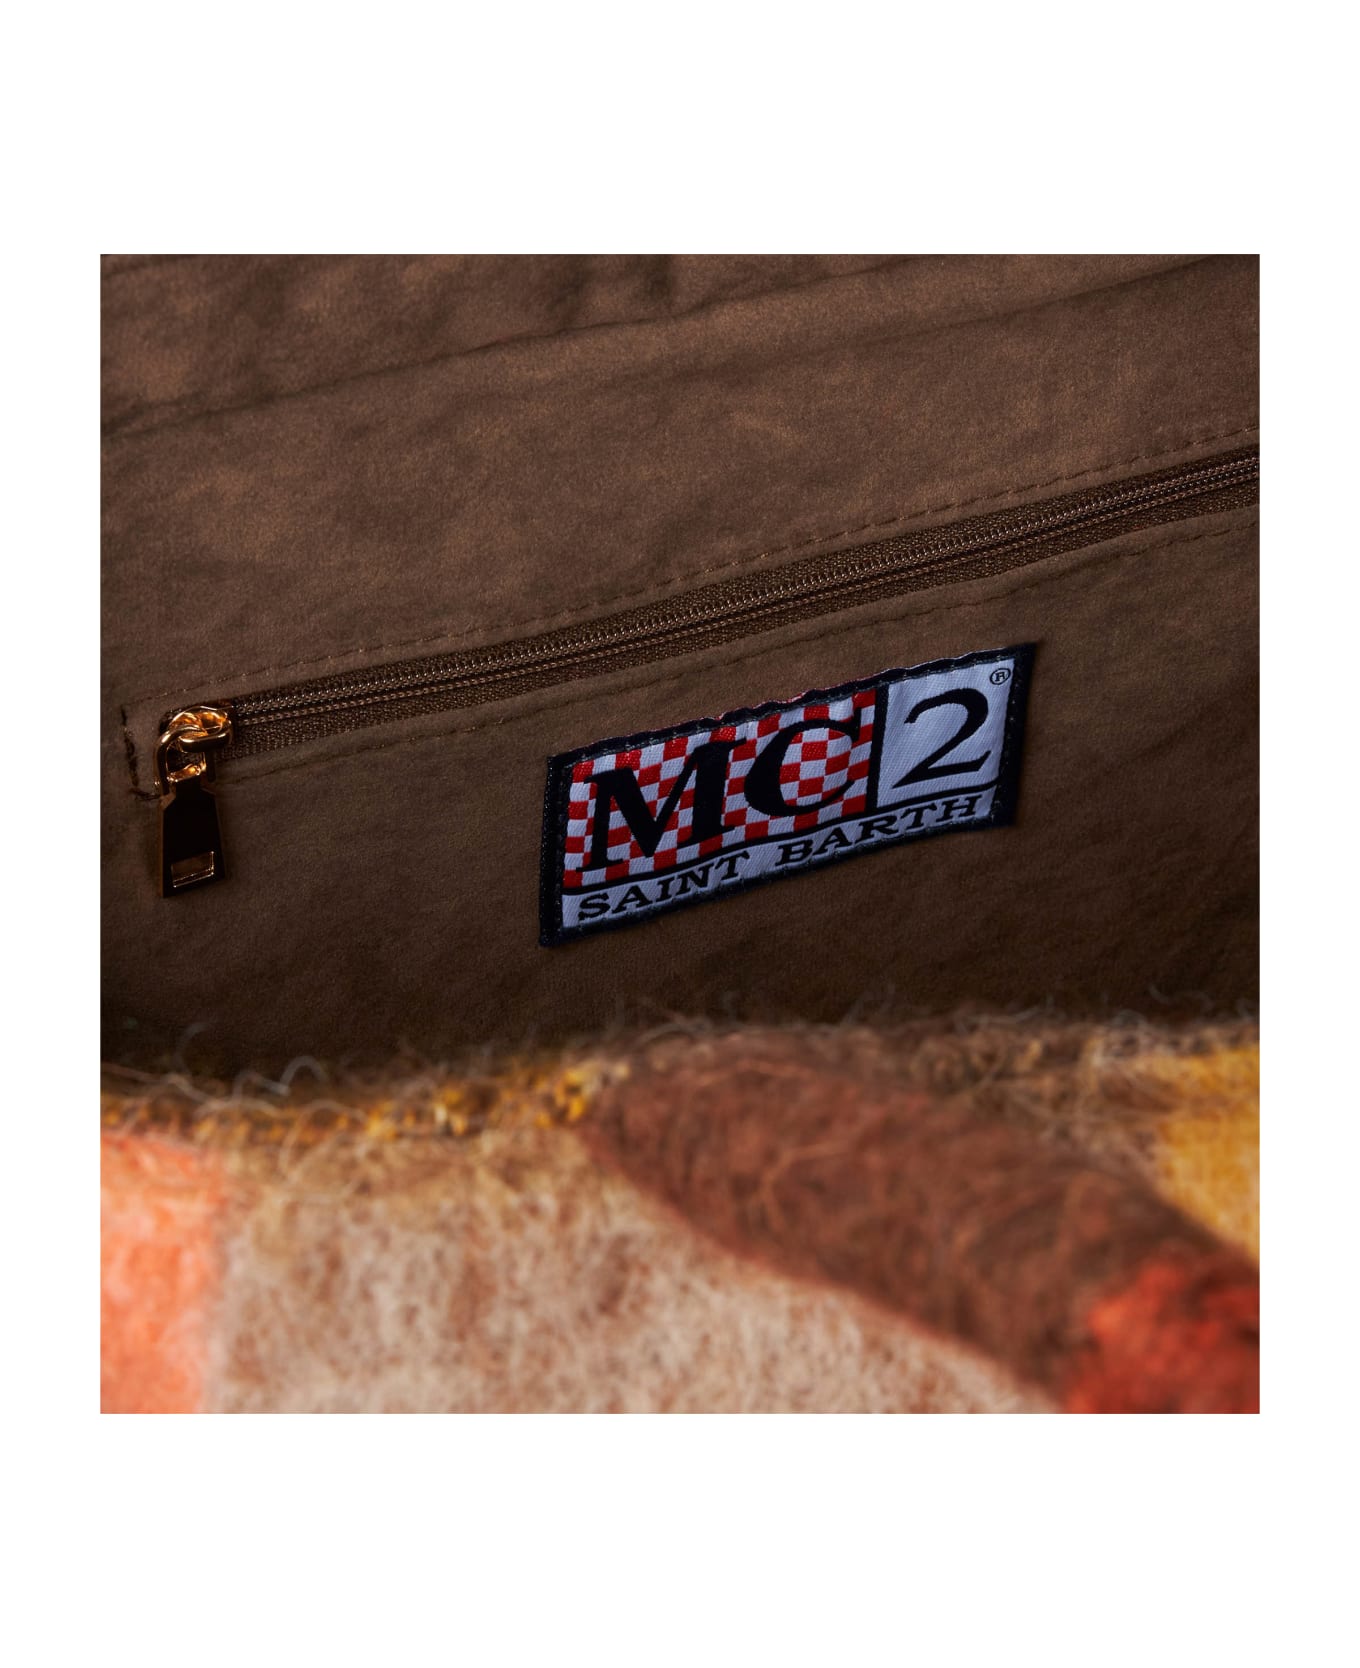 MC2 Saint Barth Vanity Blanket Shoulder Bag With Multicolor Check And Fringes - BROWN